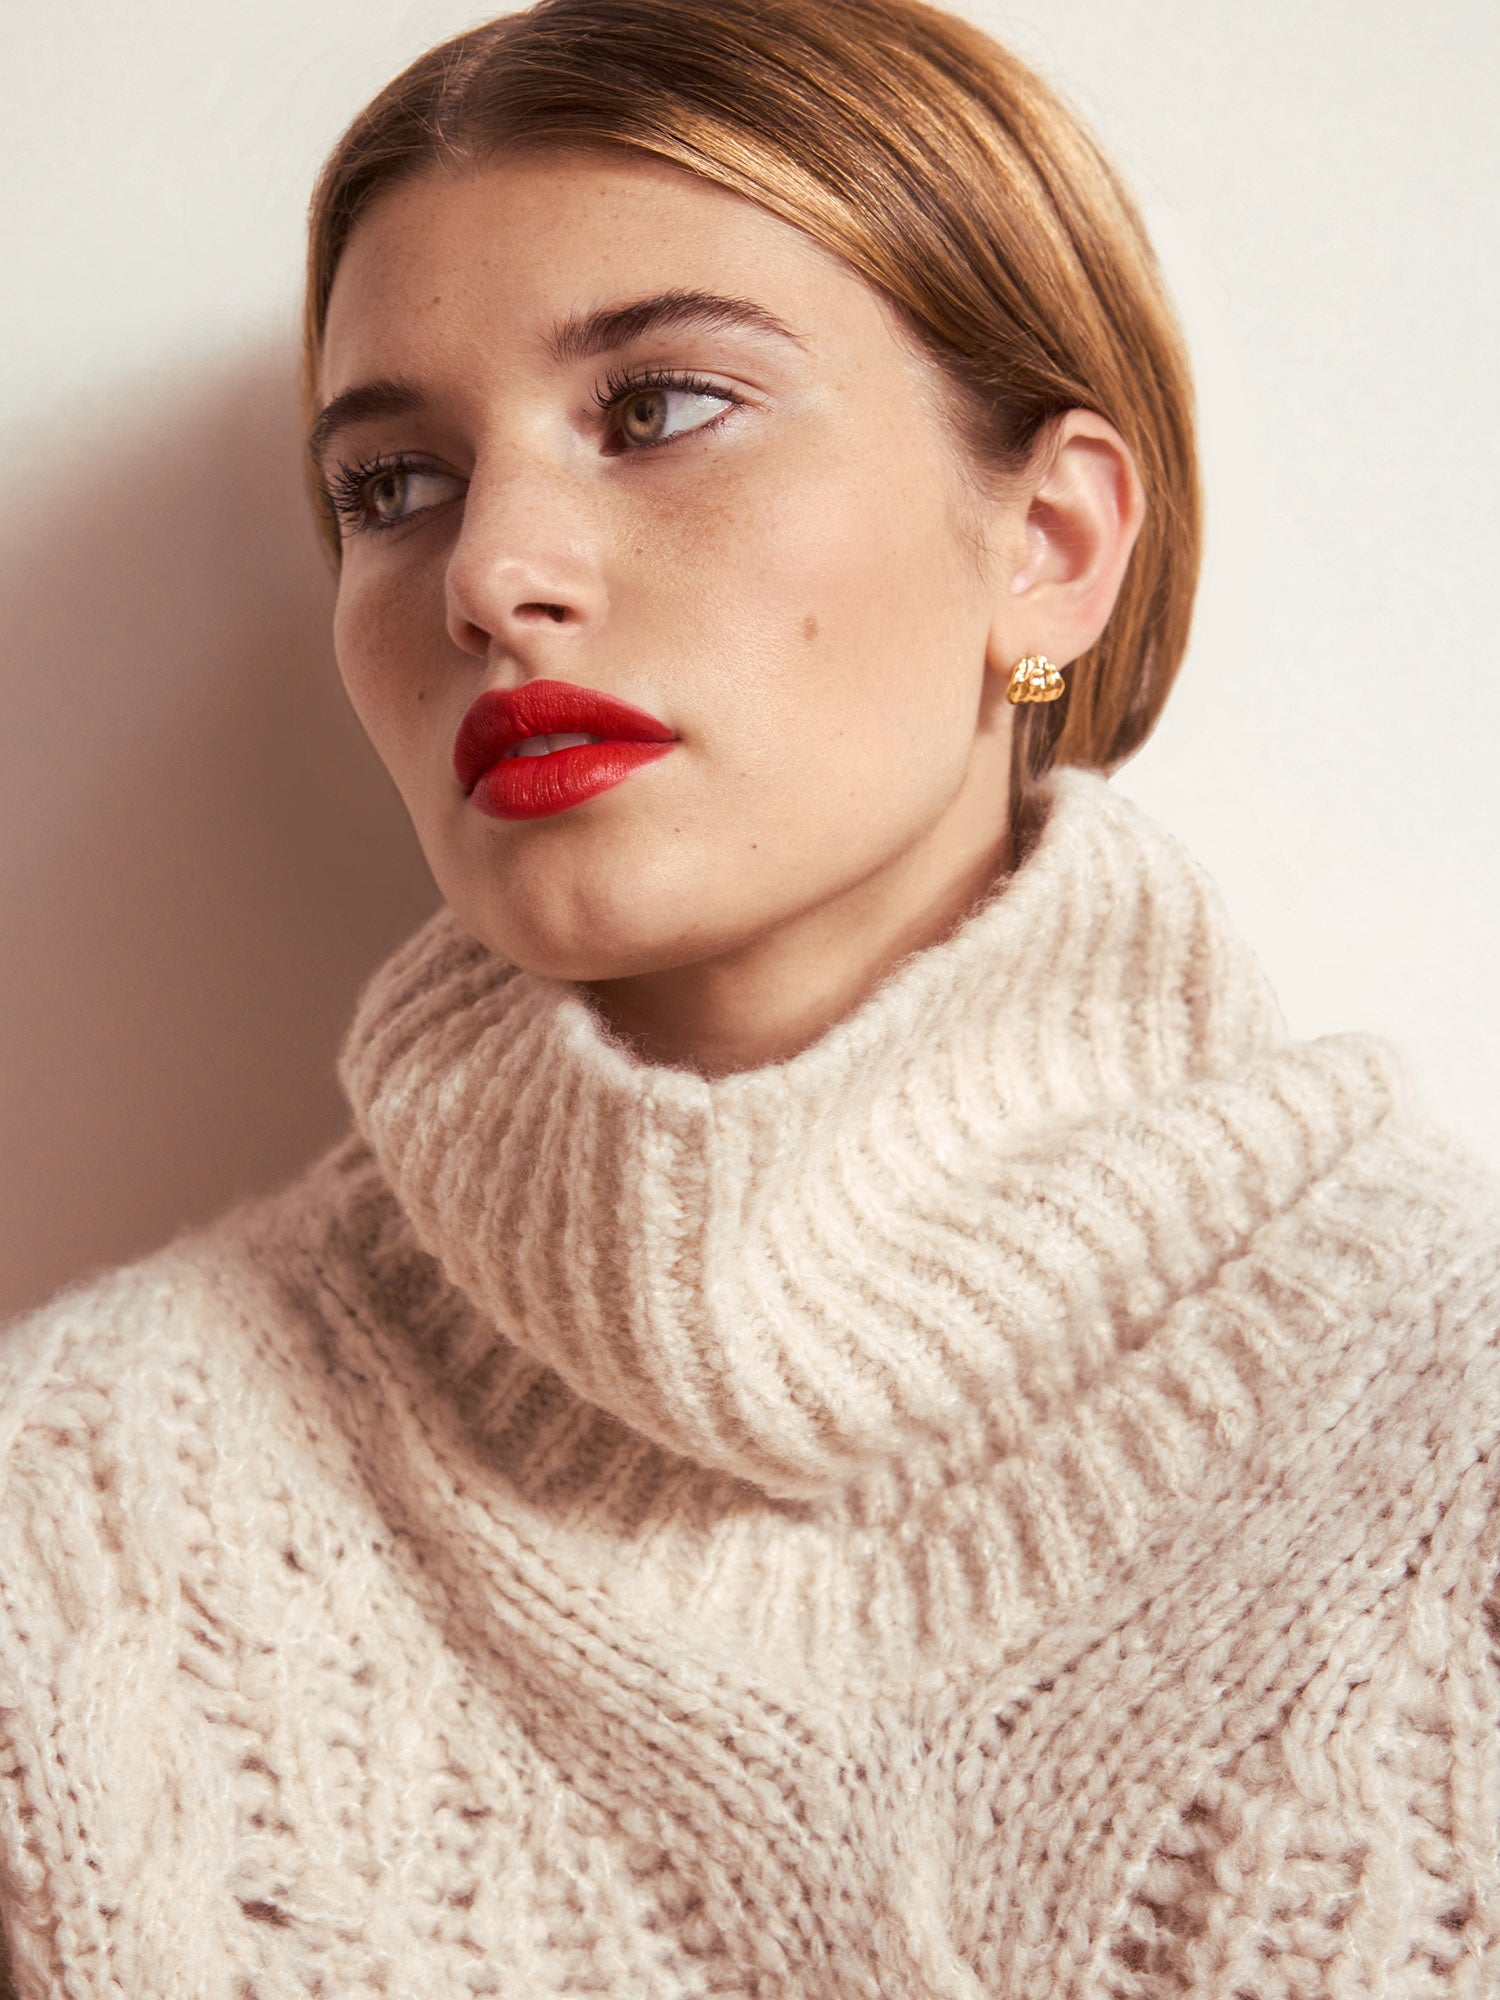 Elden cable knit beige turtleneck sweater close up